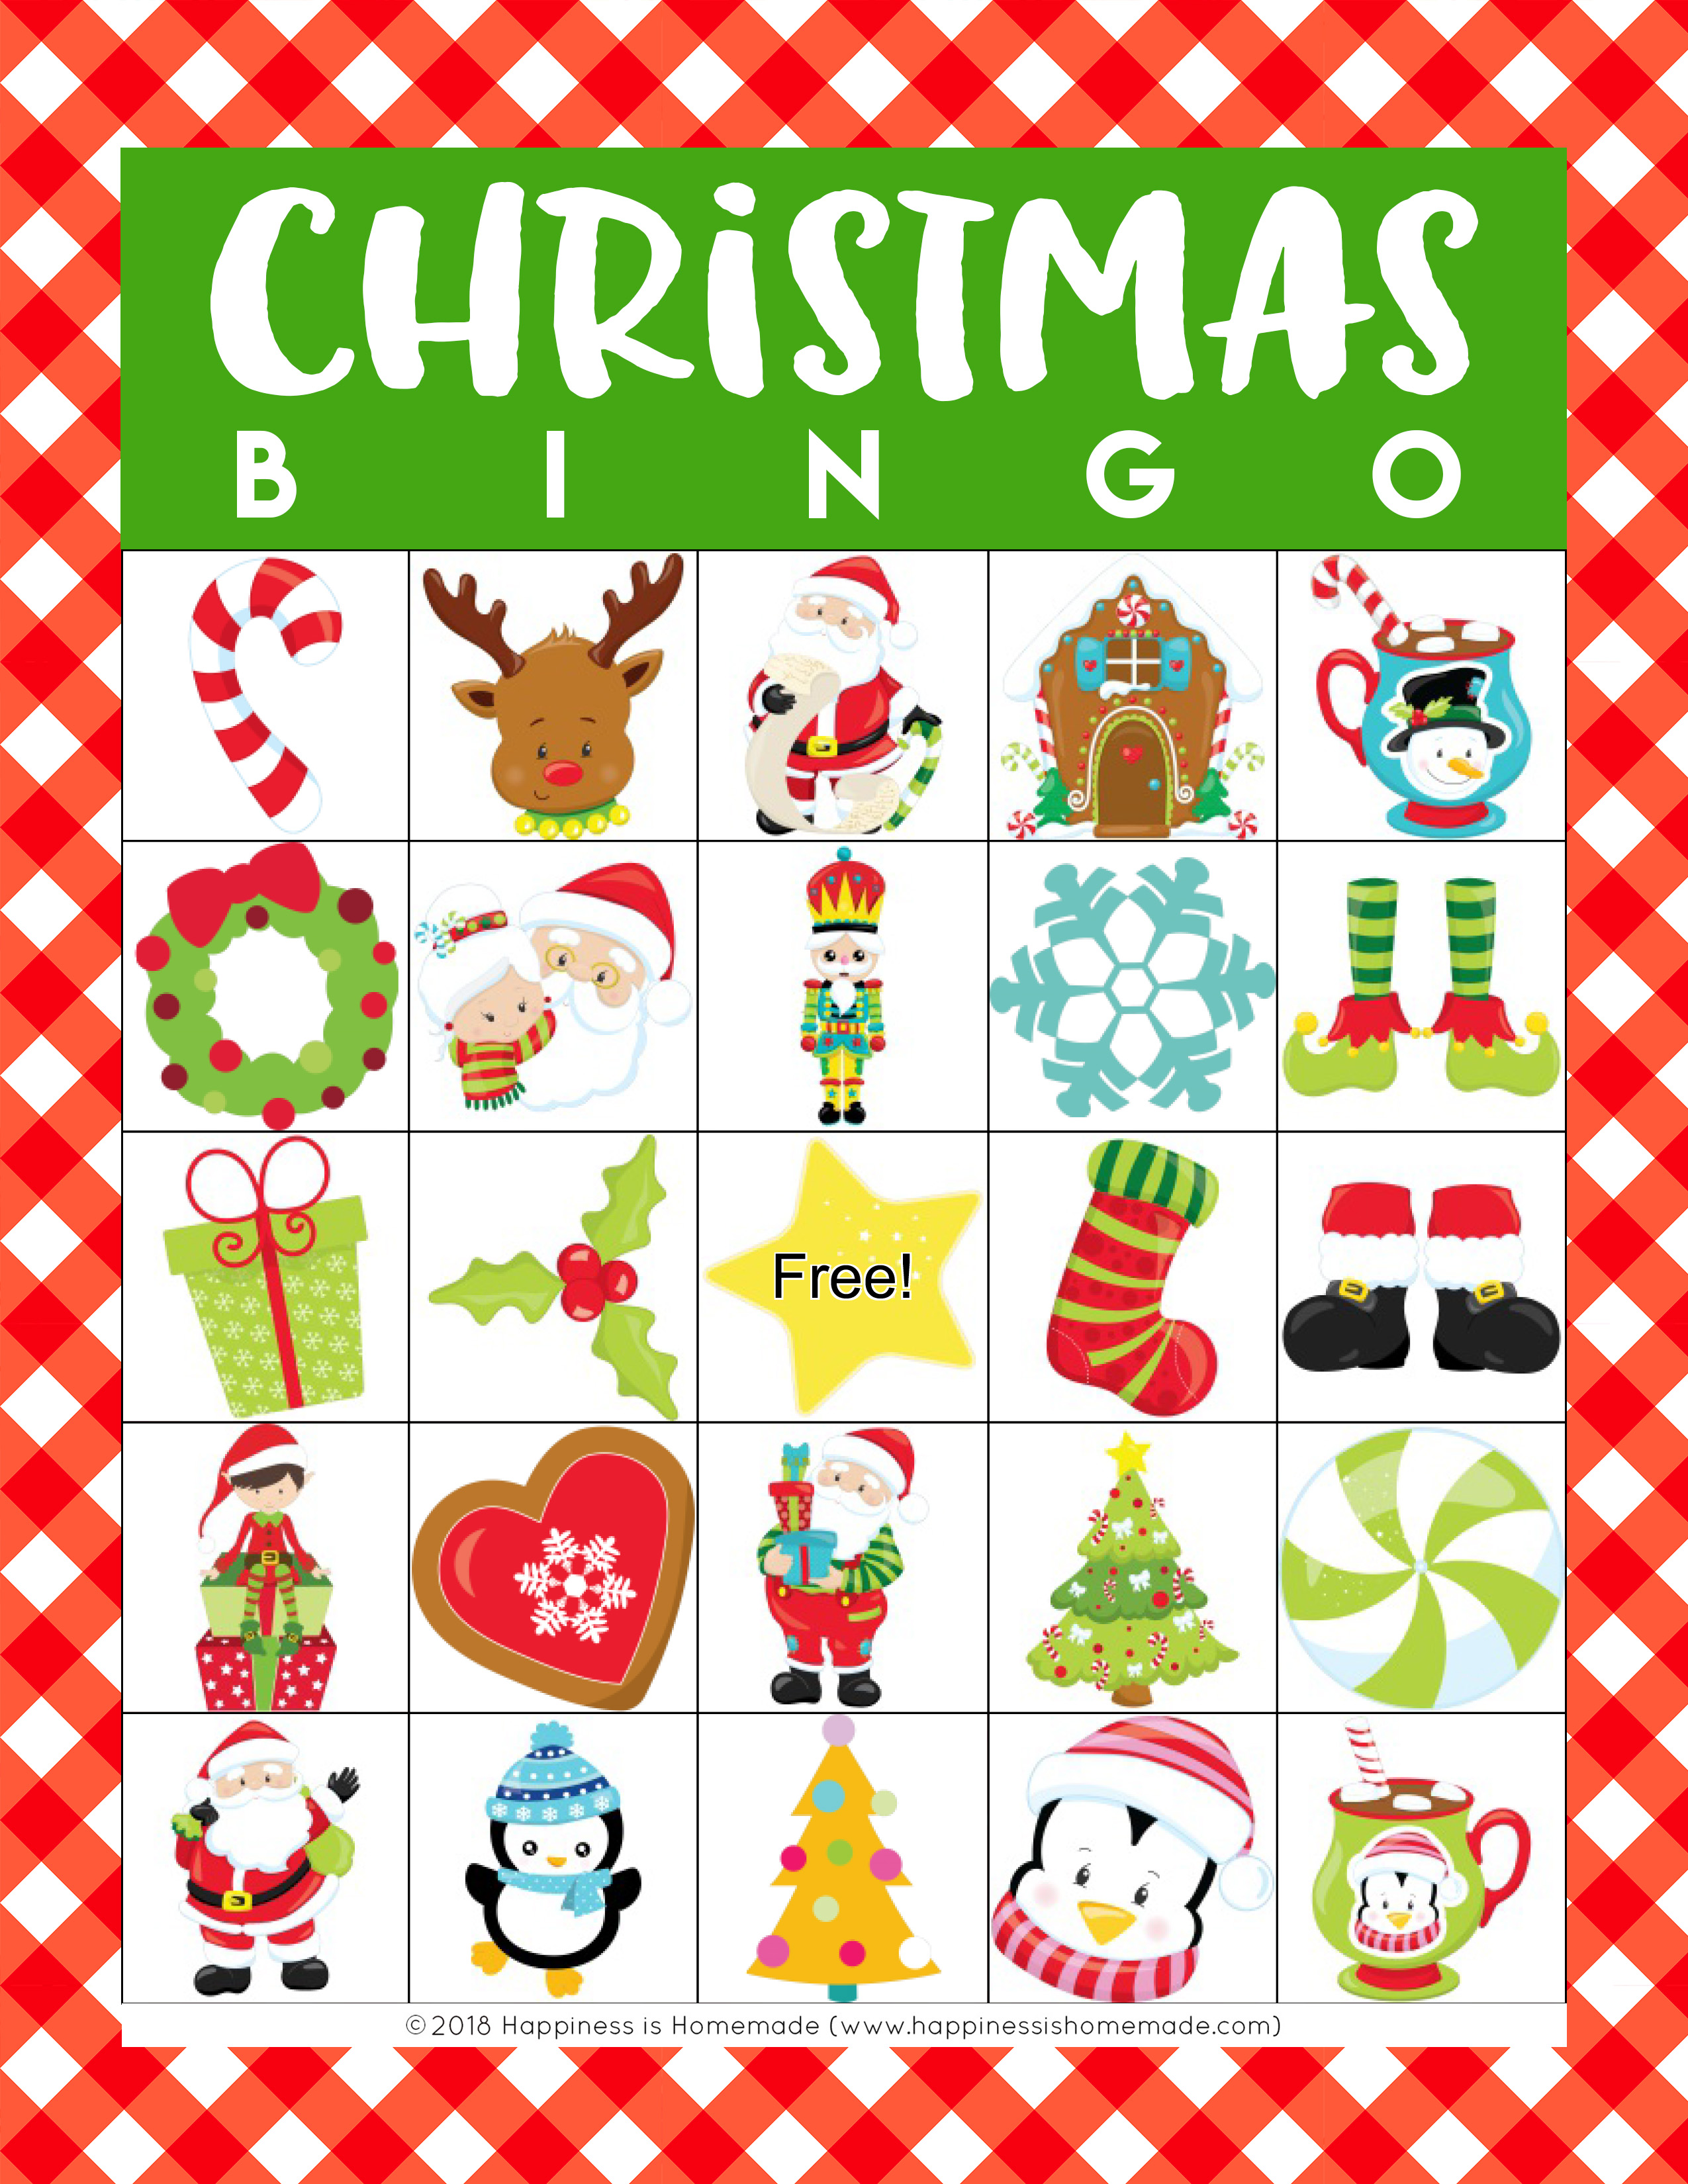 17 Best Free, Printable Christmas Bingo Games 2023